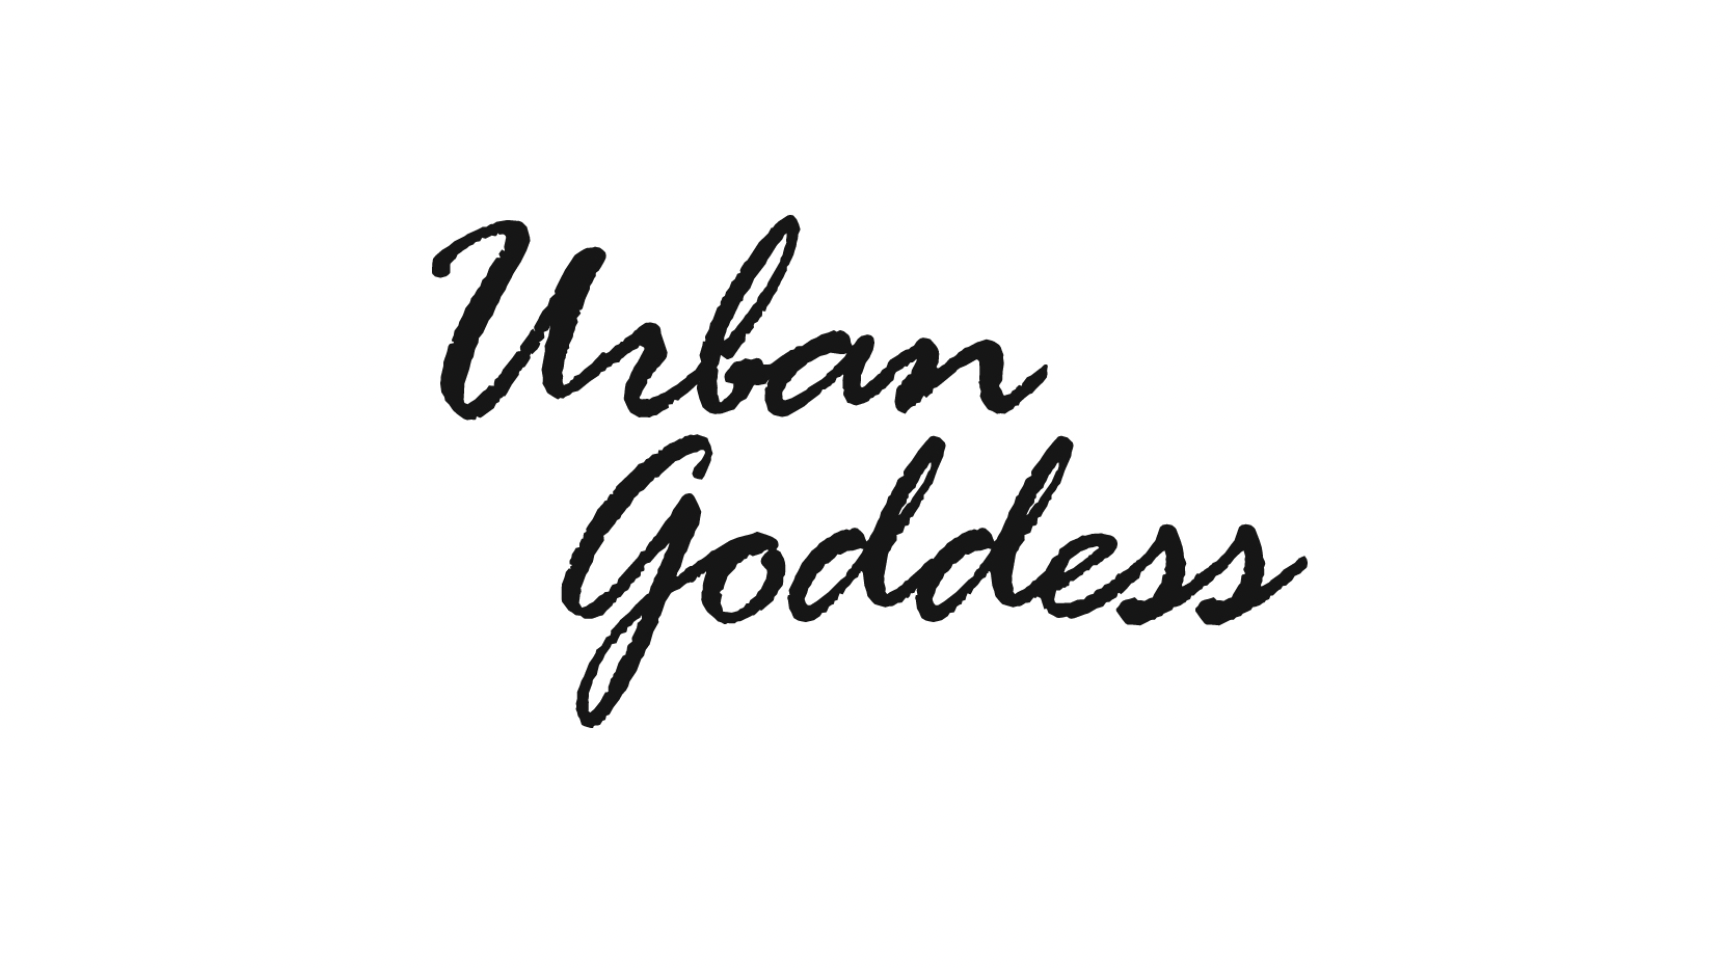 Urban Goddess wholesale products